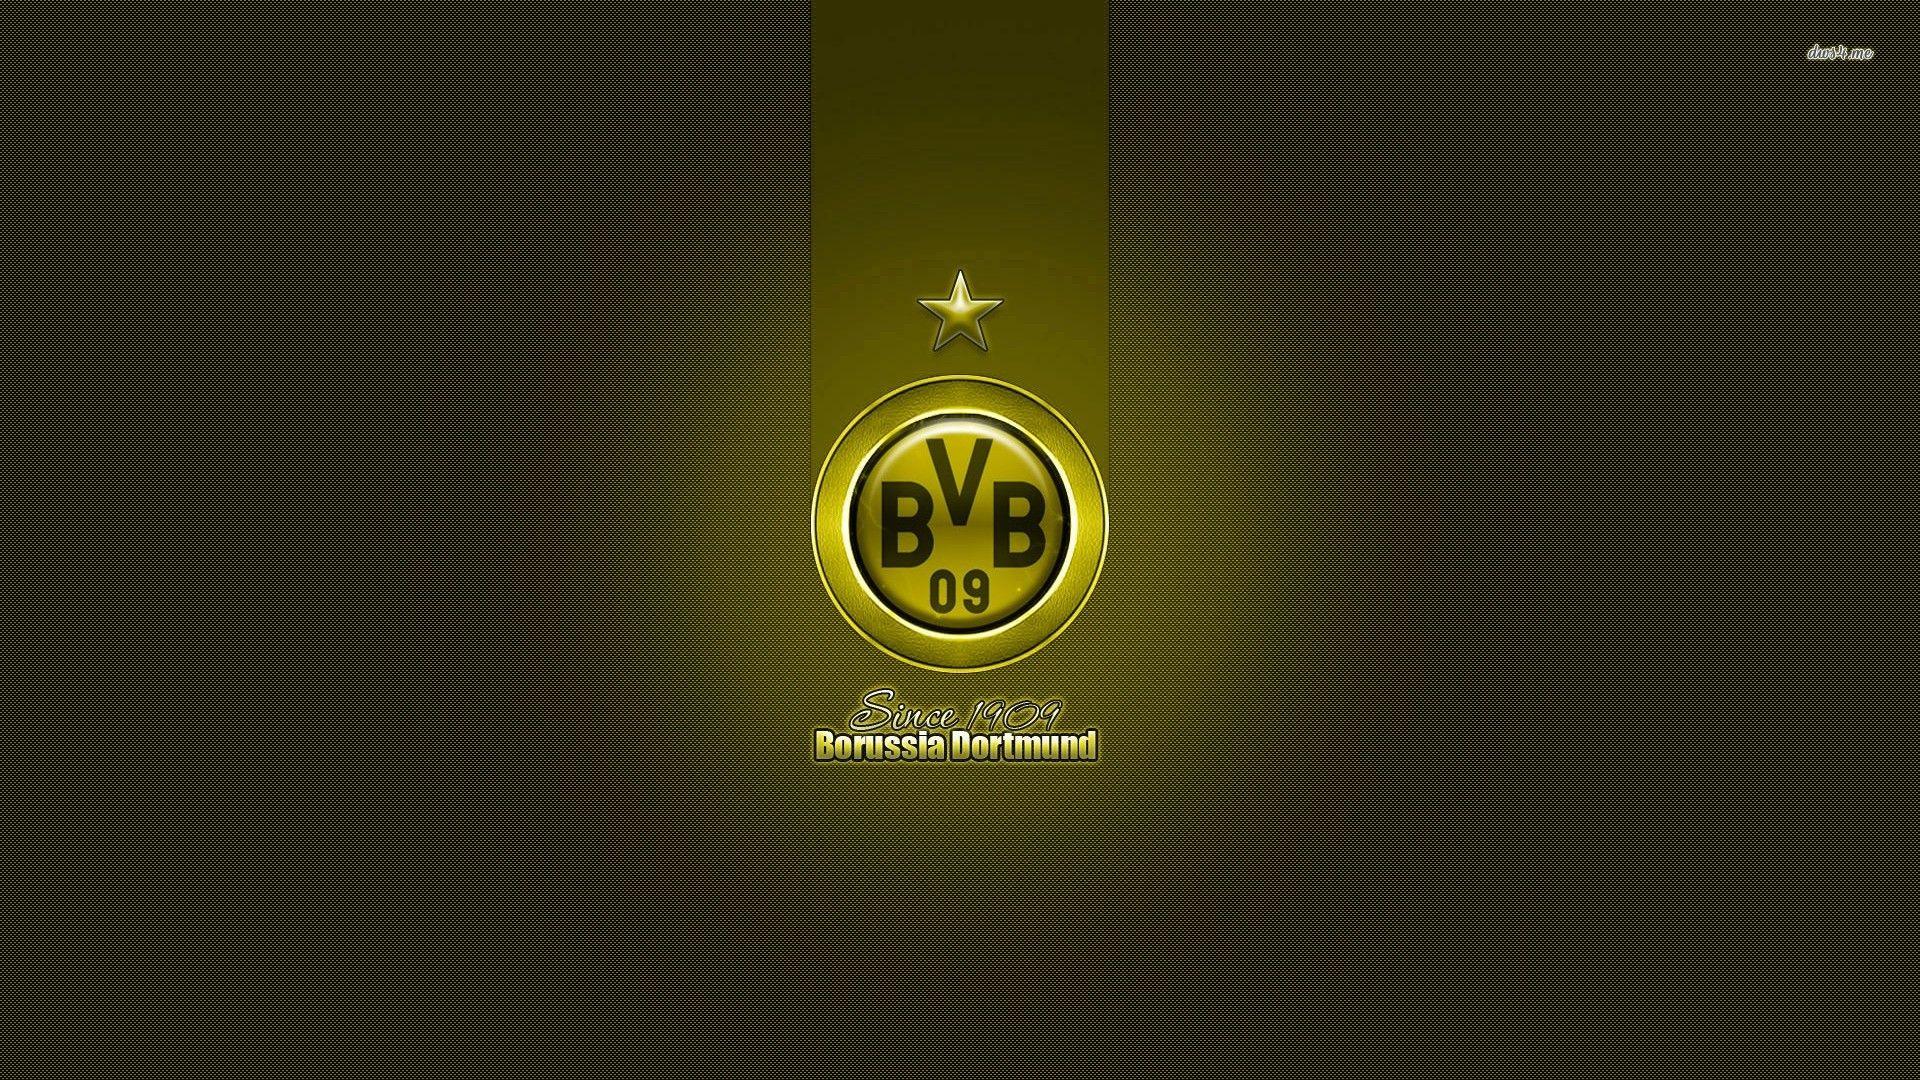 Simply: BVB BVB09 Bundesliga Dortmund borussia